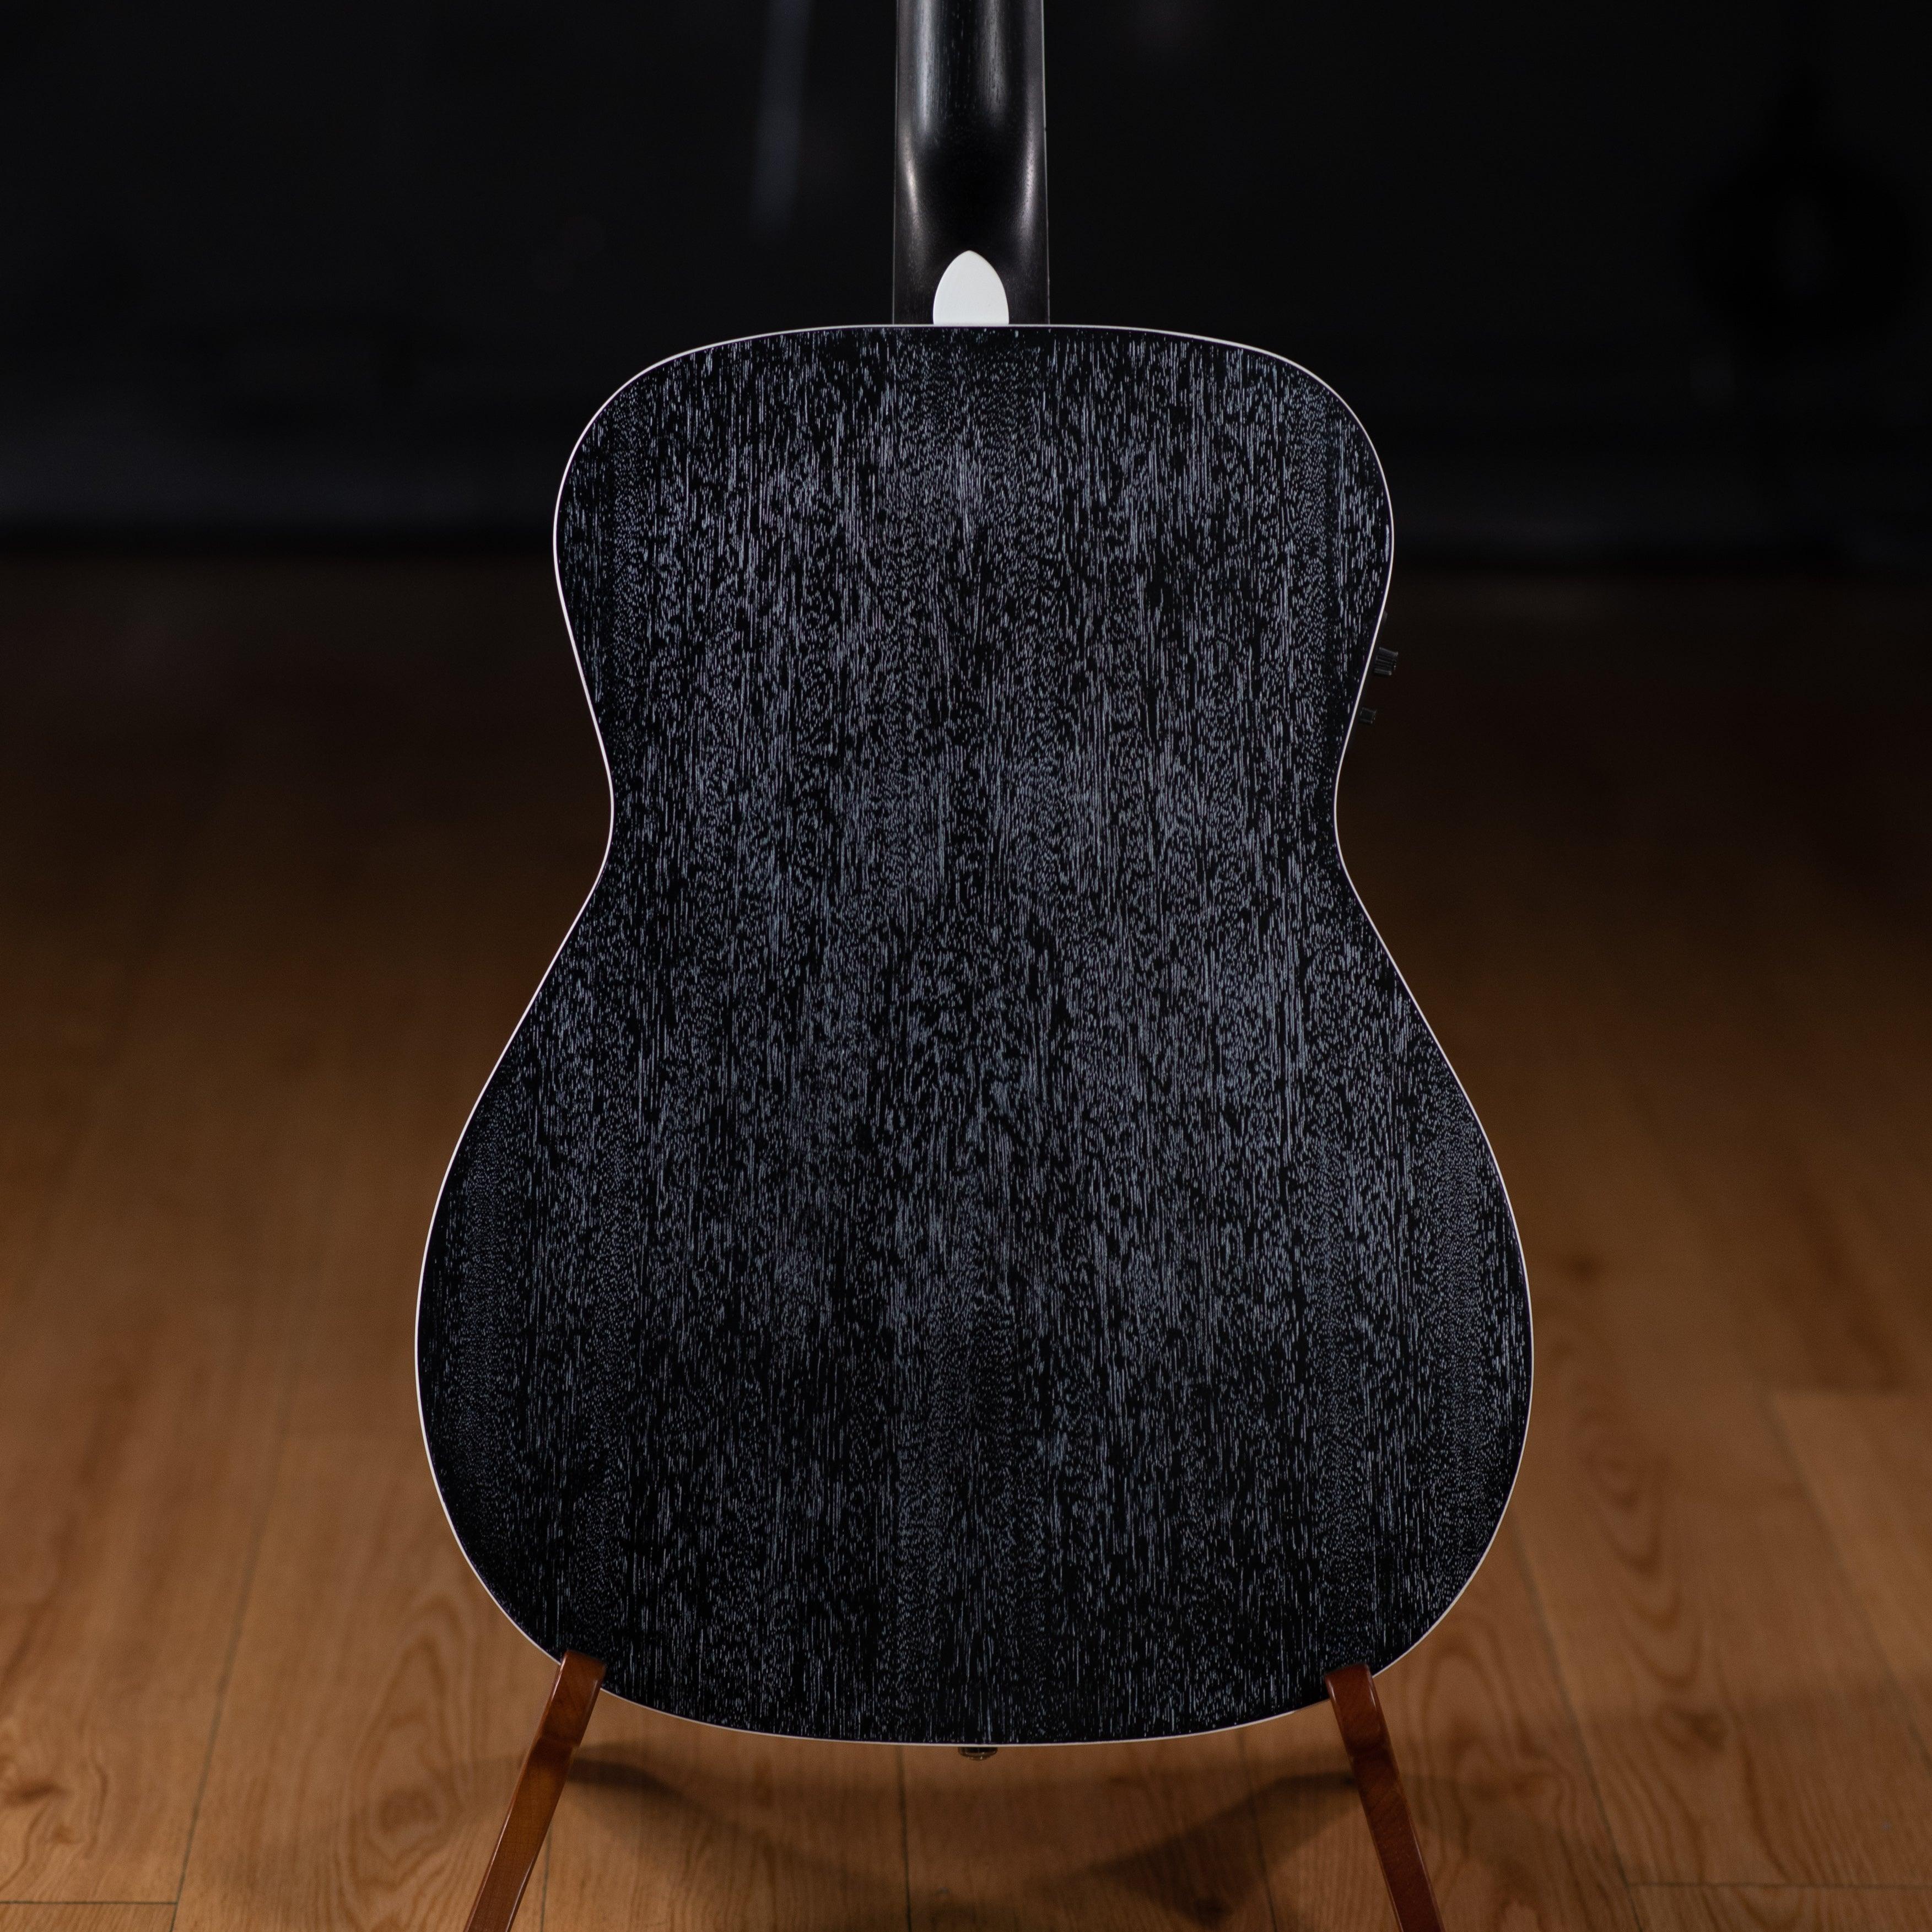 Cort AB590MF Open Pore Black Acoustic Bass - Impulse Music Co.